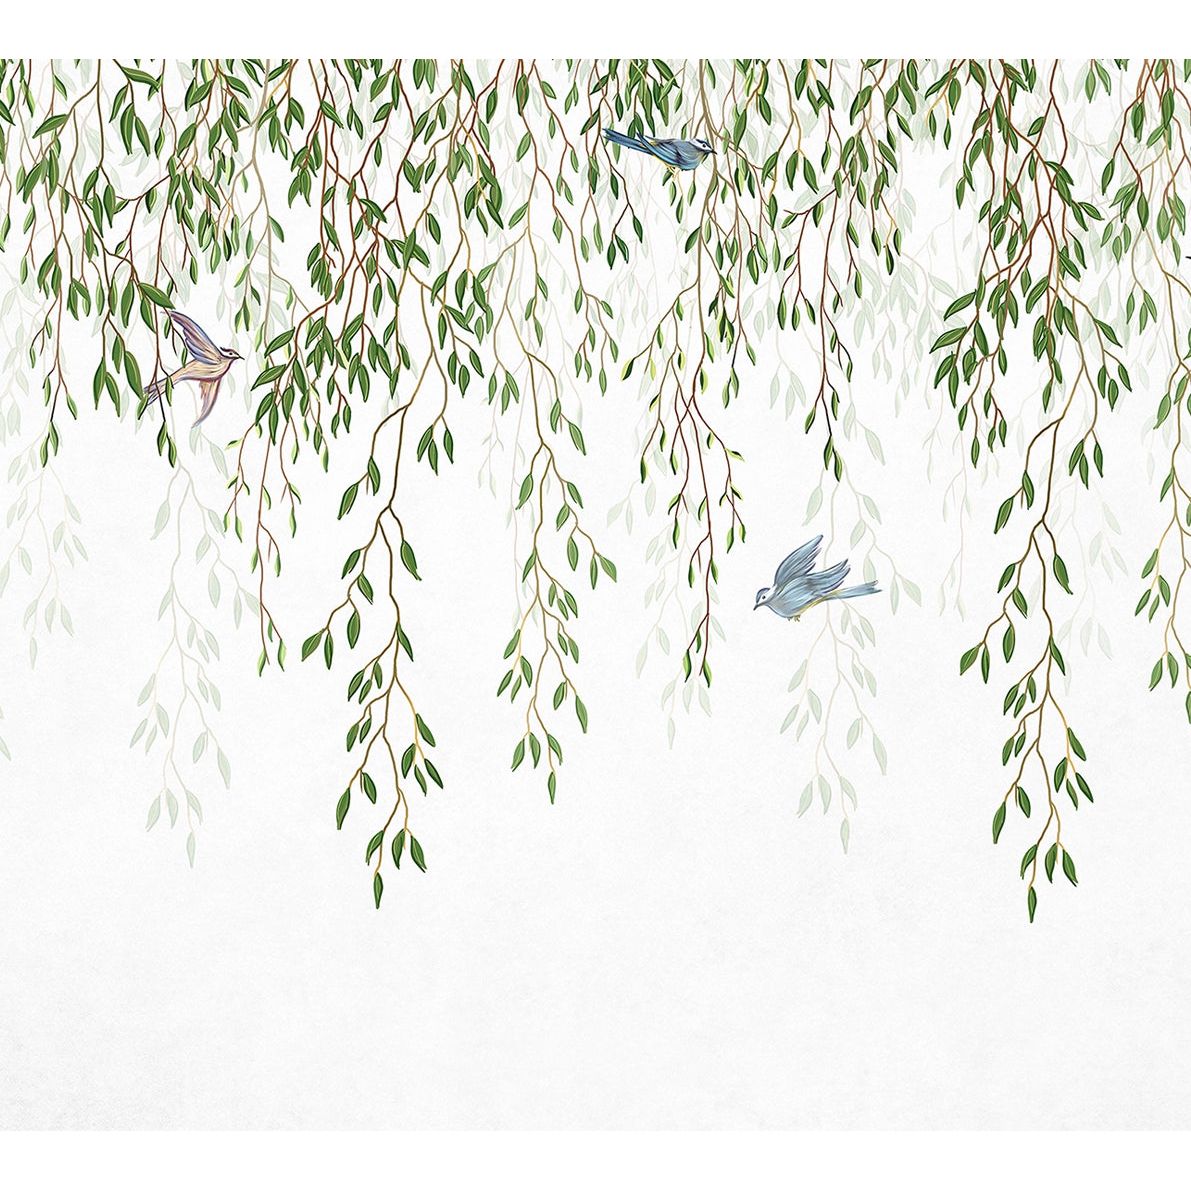 Gentle Serenade: Birds and Green Leaves Wall Mural